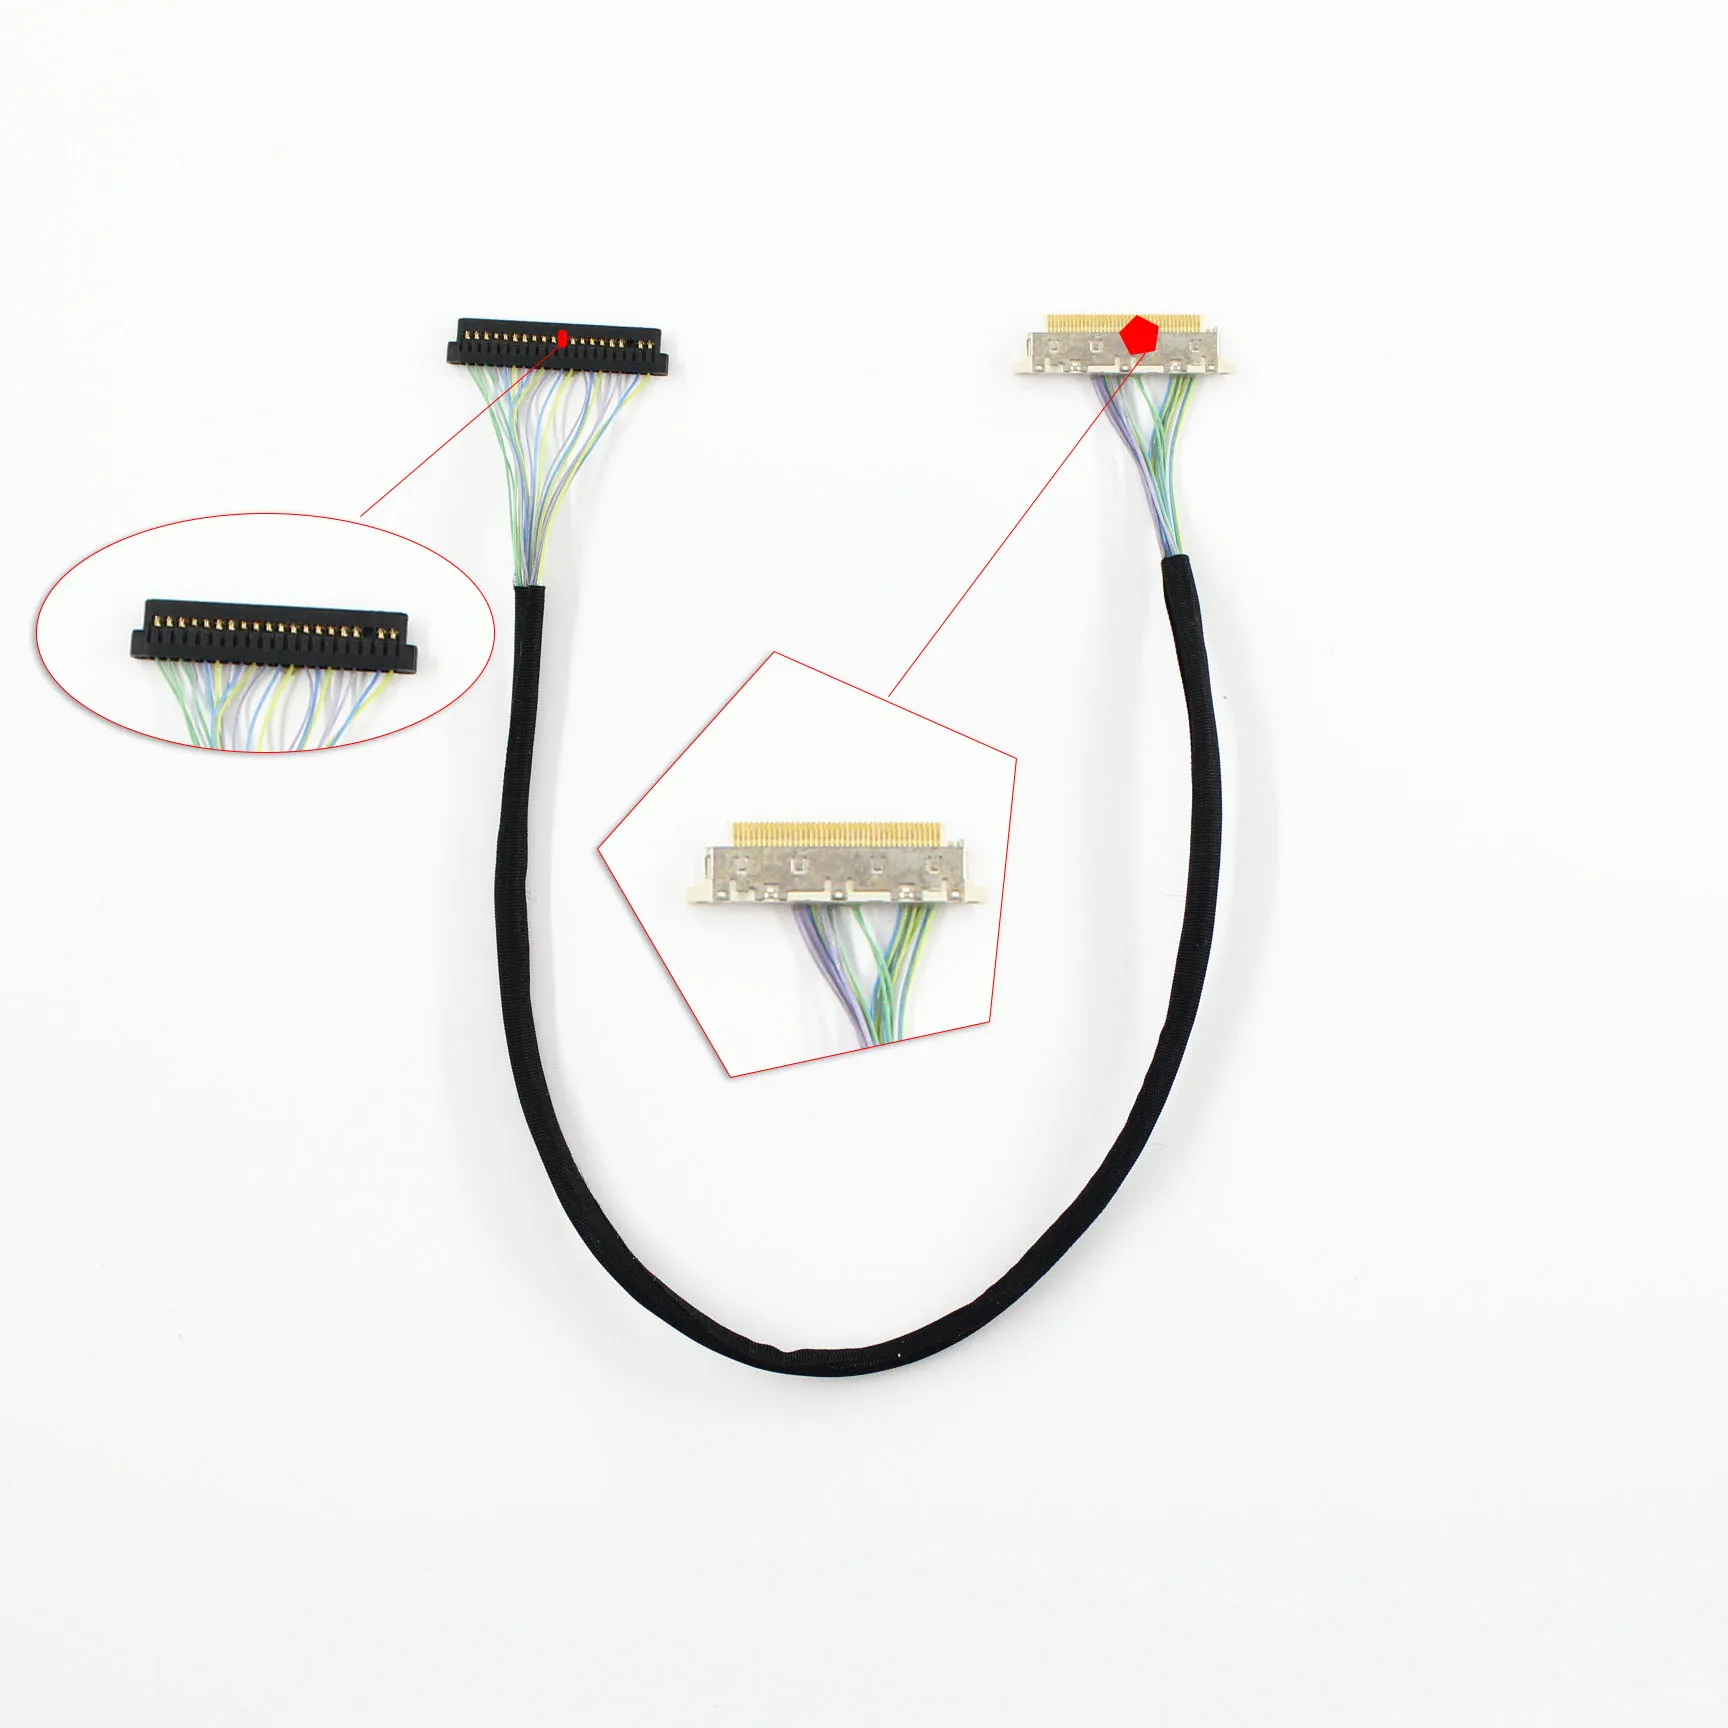 Panou LCD cablu 88441-fis sprijinul 20 pini FI-SE20ME conector Pin pitch 1.25 mm lvds ecran pentru DN2800MT Mini-ITX Imagine 2